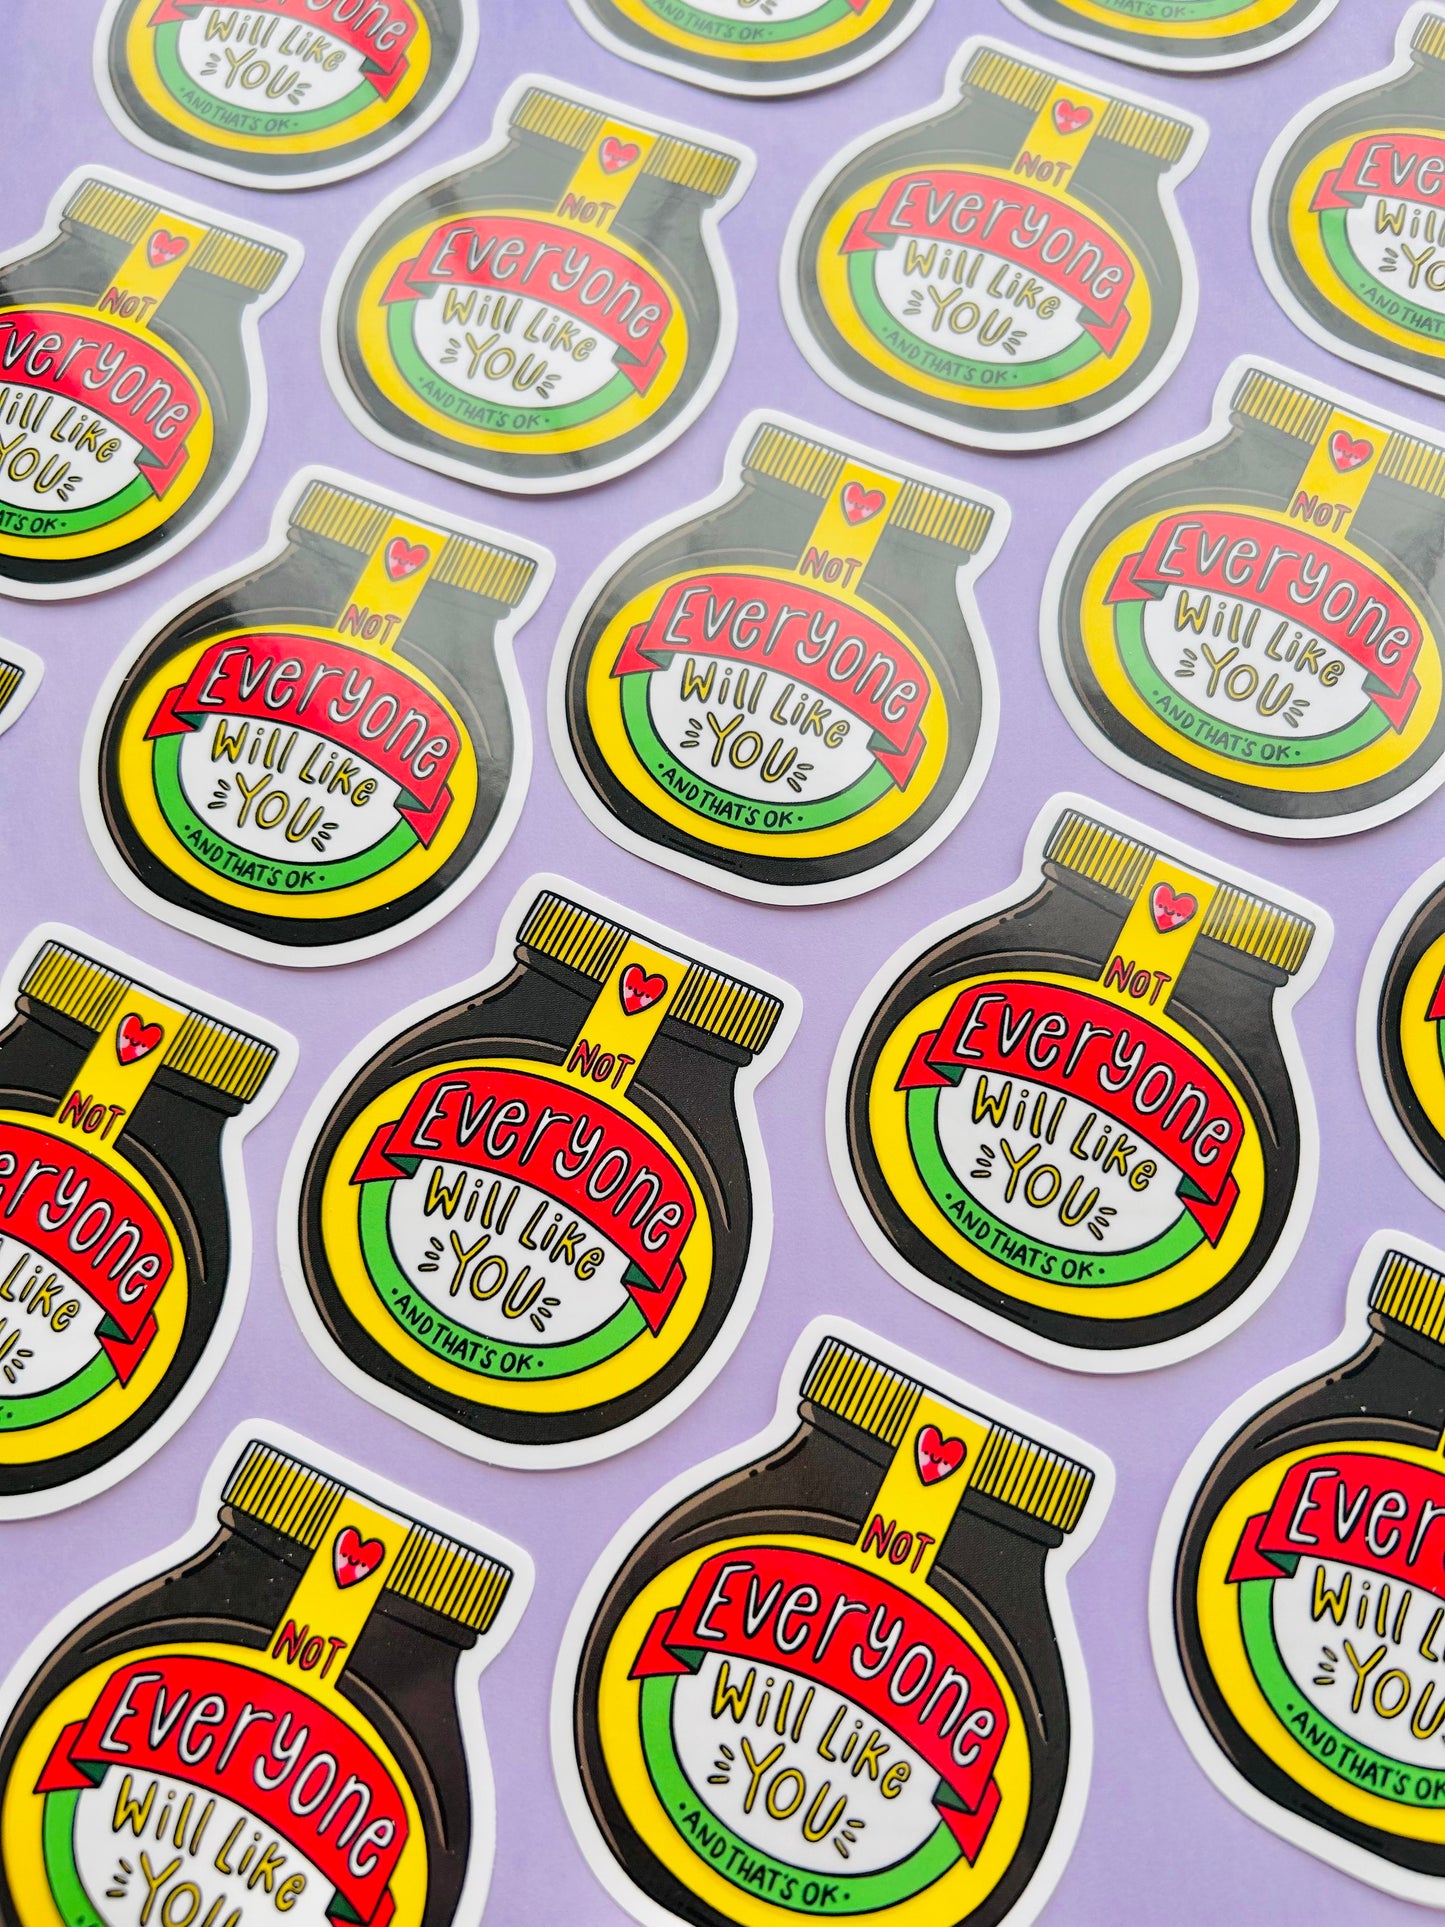 Not Everyone Will Like You - Marmite Sticker